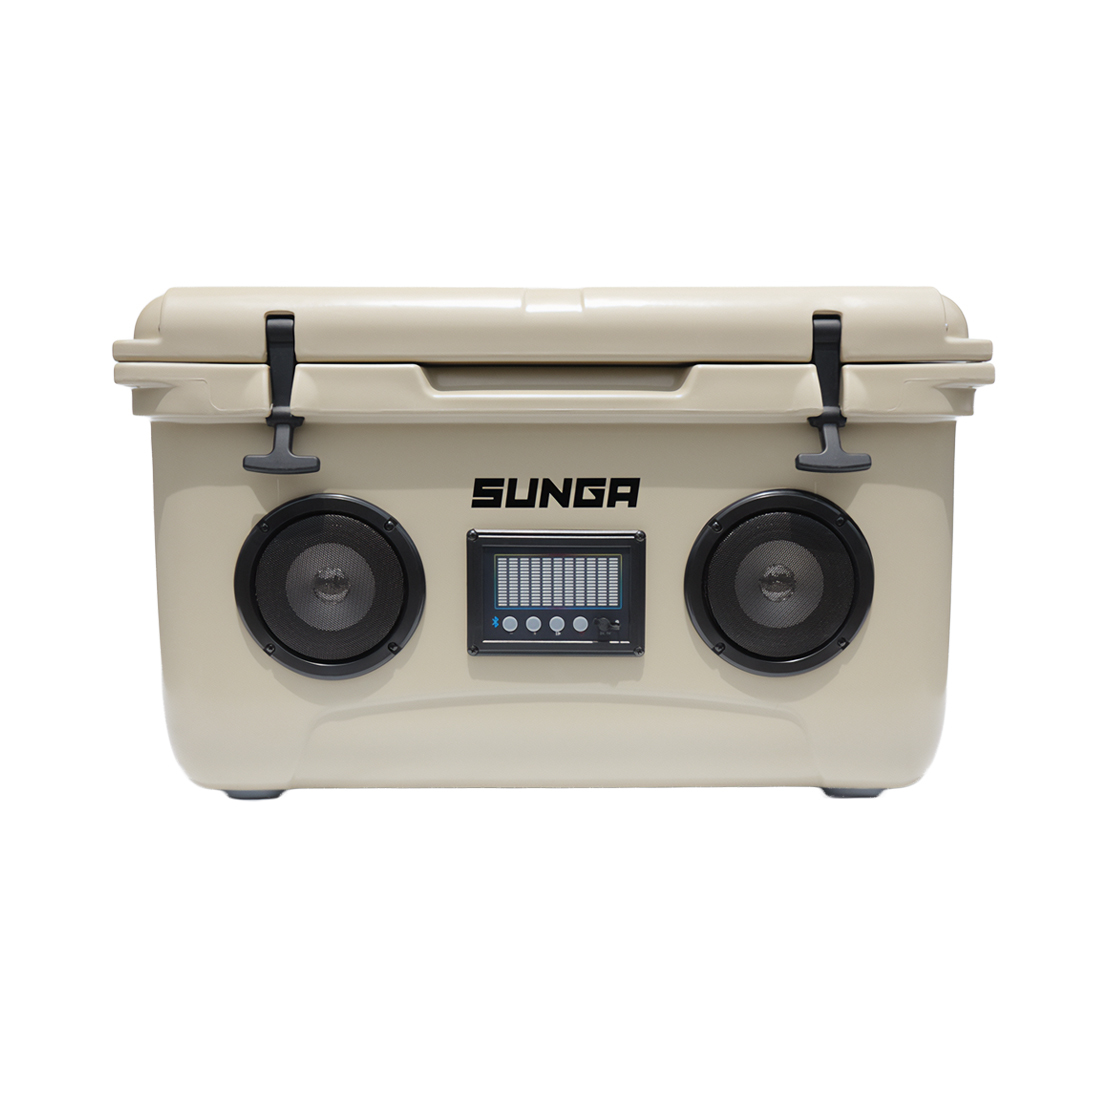 SUNGA クーラーボックス 45L Bluetooth スピーカー ベージュ 大型 クーラーバッグ アウトドア キャンプ 釣り バーベキュー_画像1